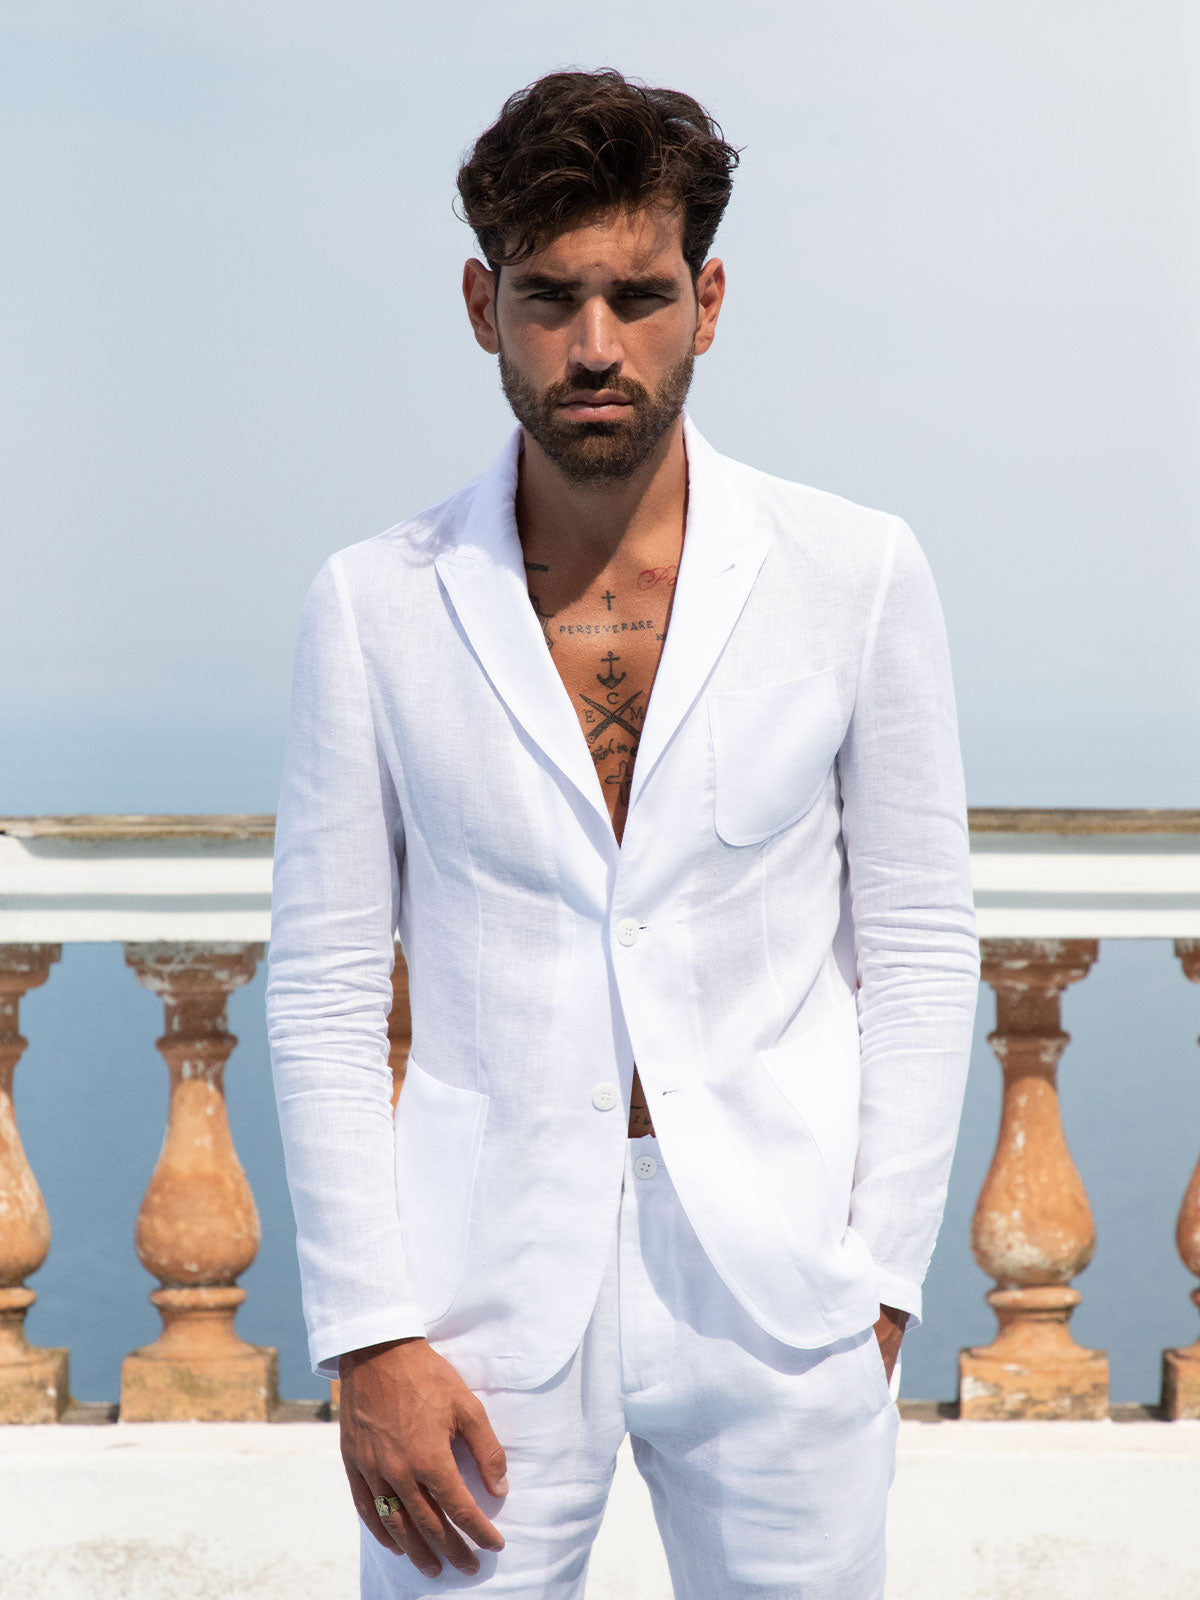 Giacca St. Tropez 100% Capri white linen jacket for man worn by model 